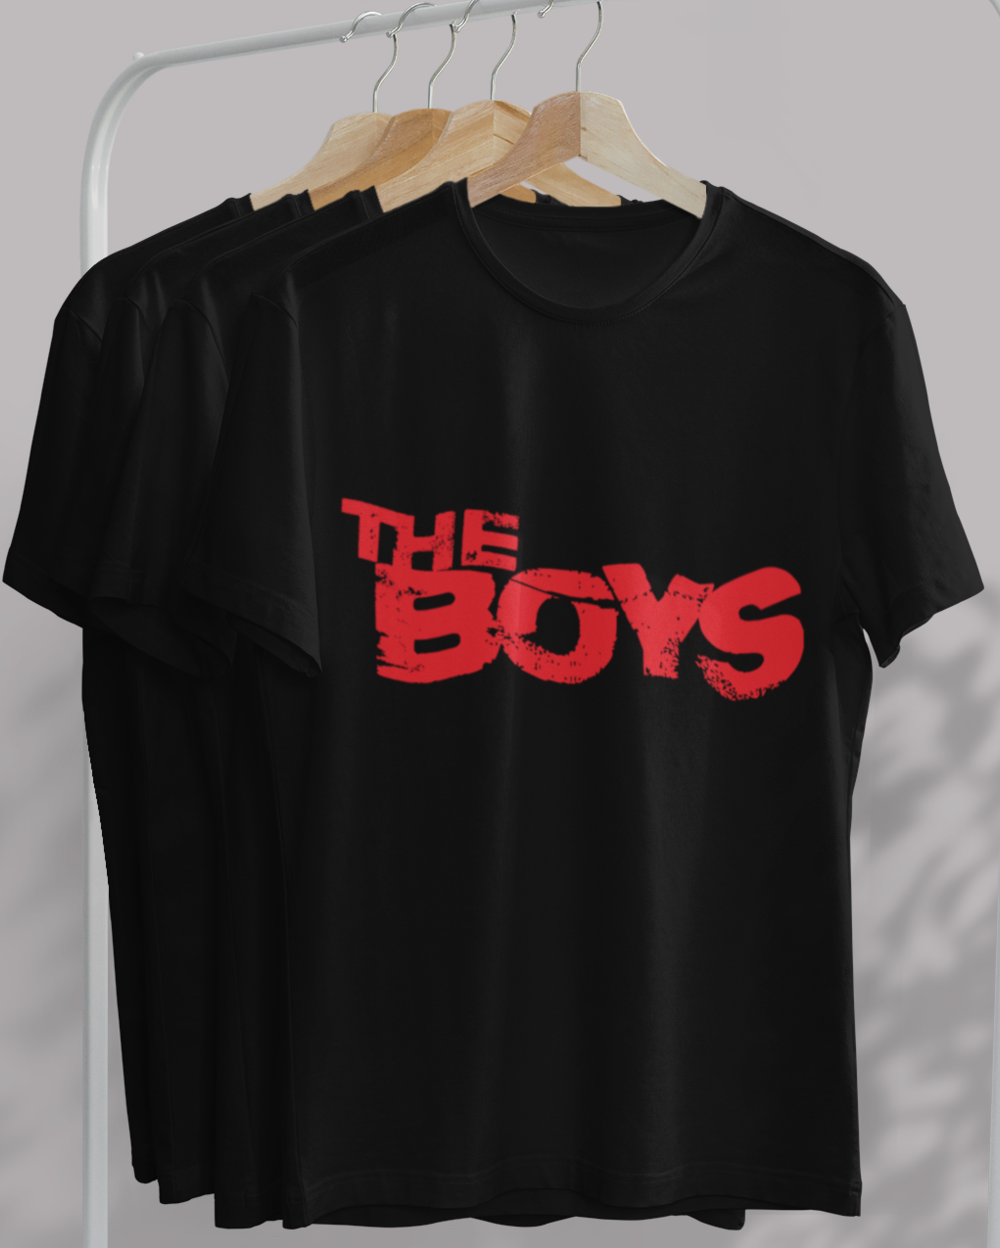 THE BOYS Group Tshirt